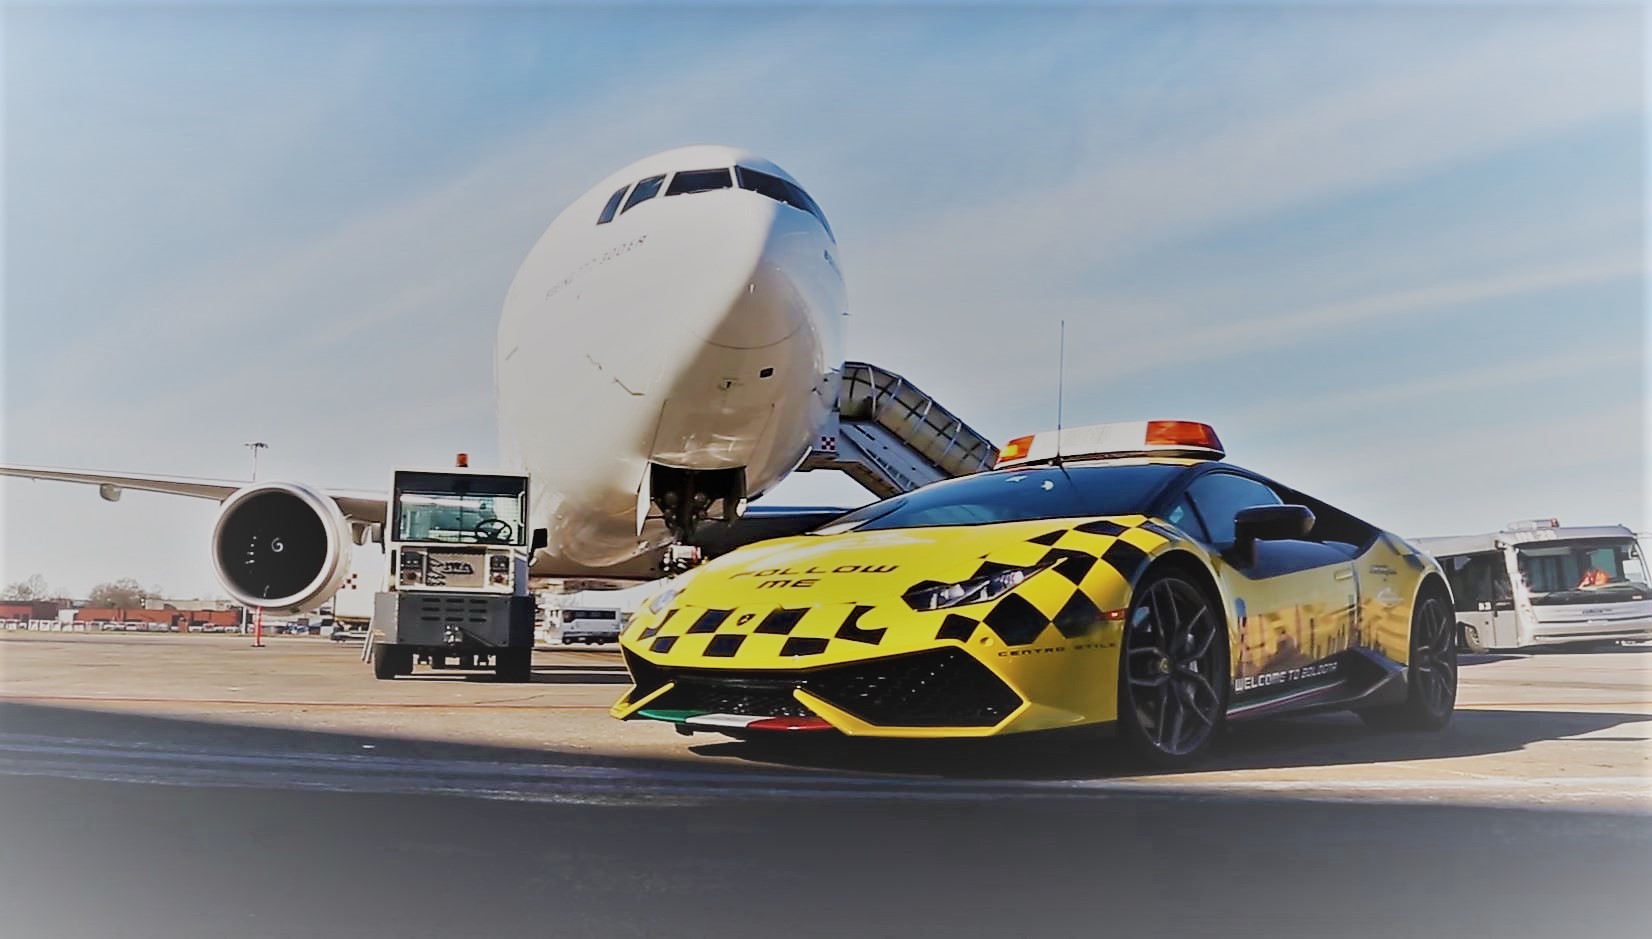 Emirates Boeing 777 chases Lamborghini Supercar at Bologna Airport